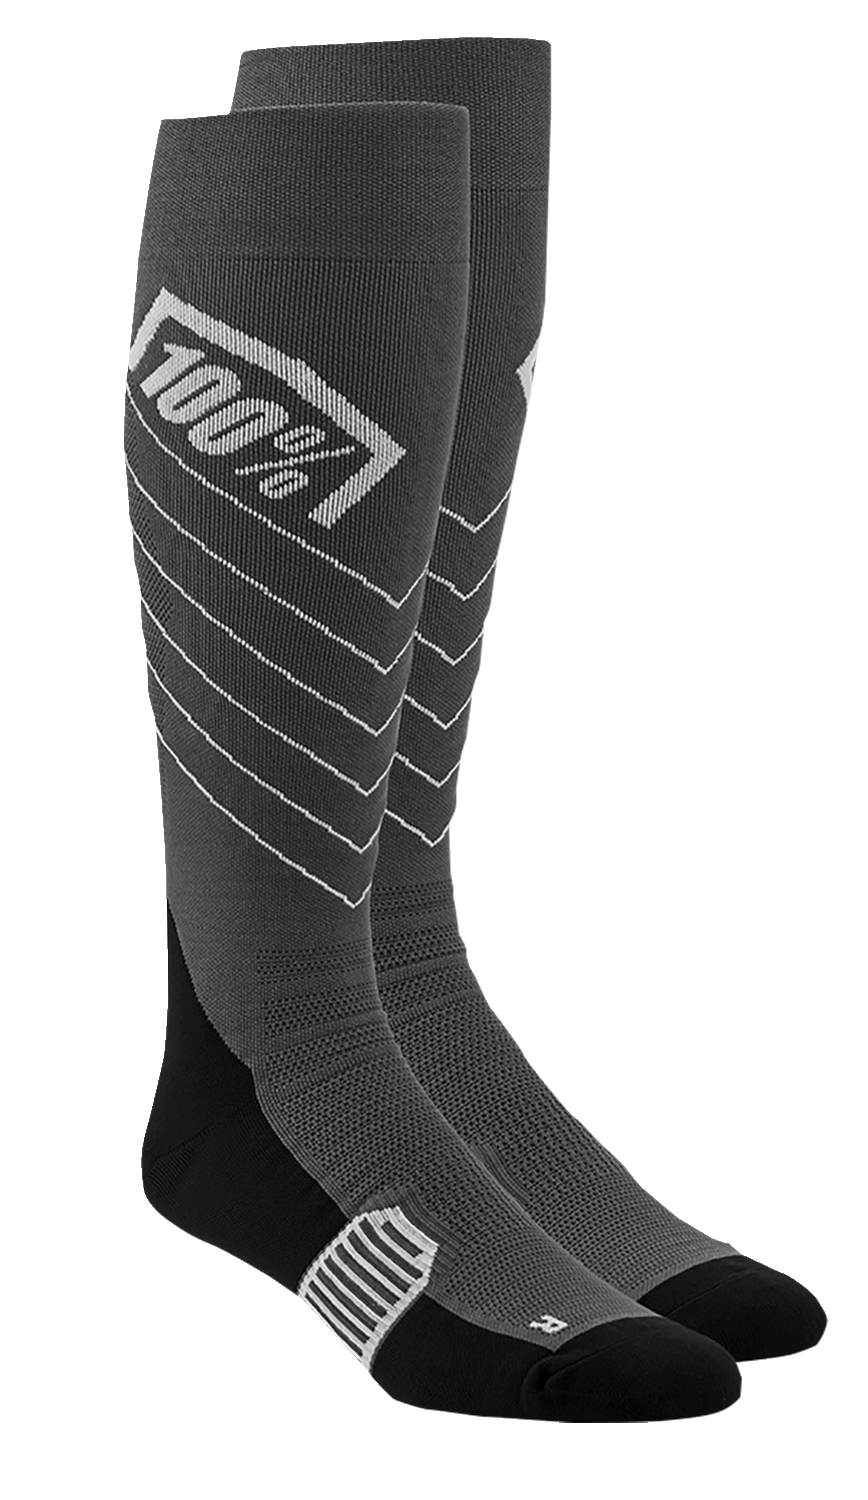 100% Hi-Side Performance Socks - Gray - Large/XL 20054-00002